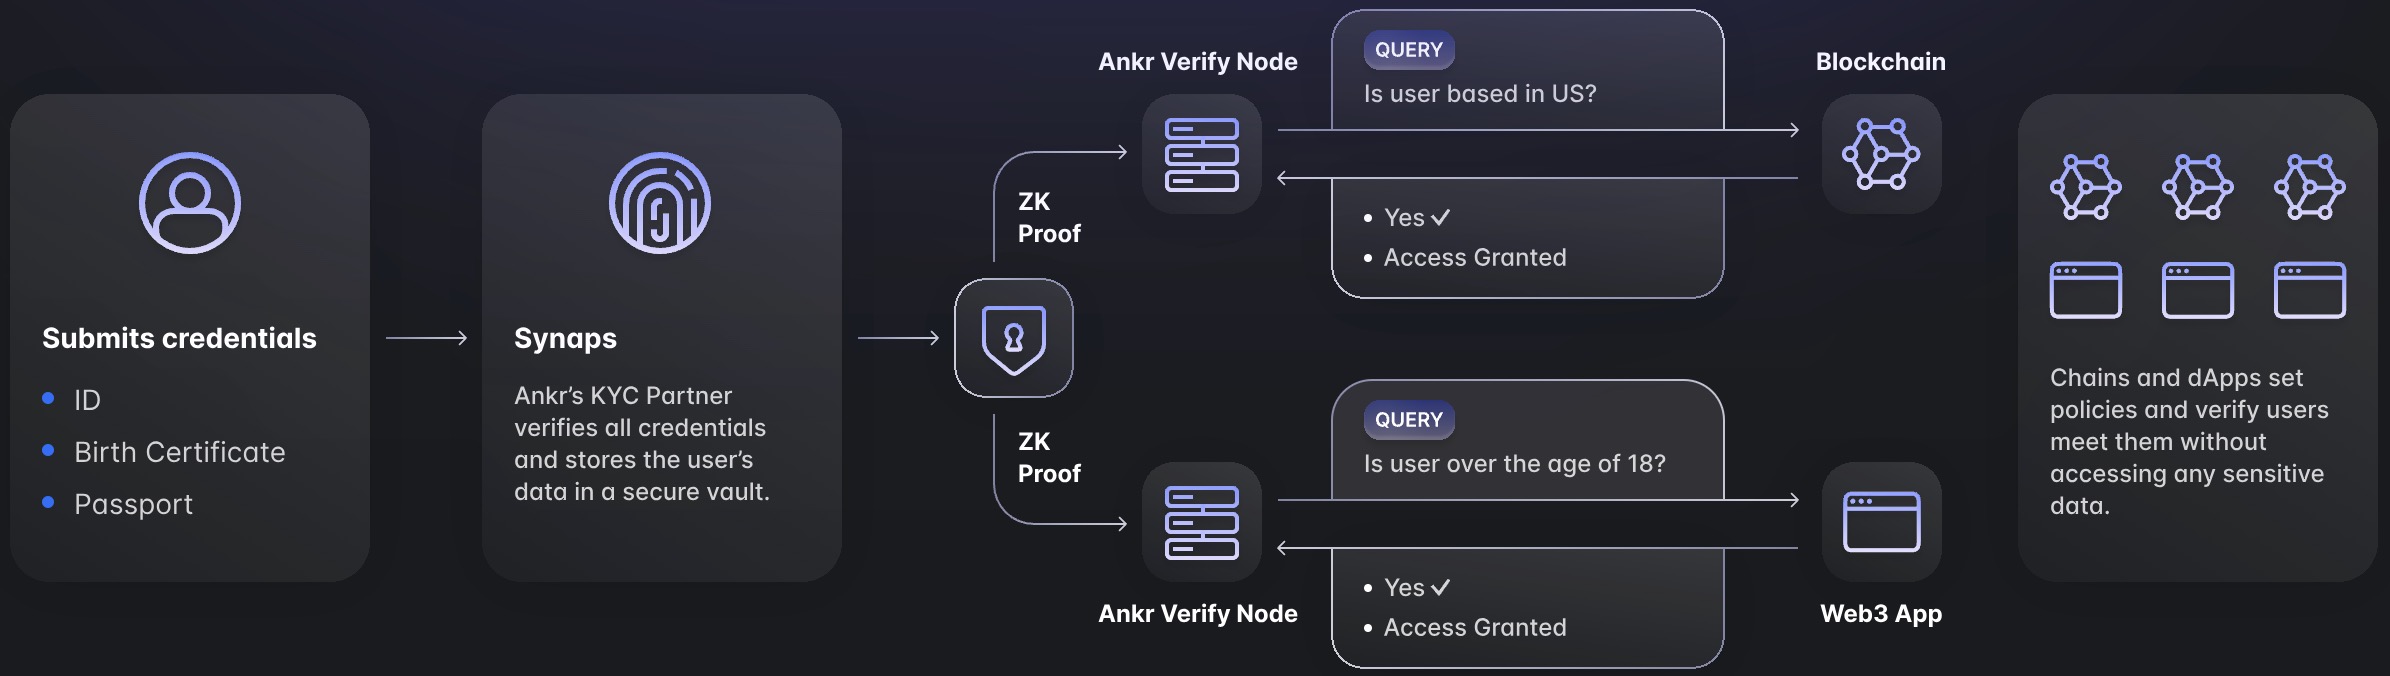 How Ankr Verify works